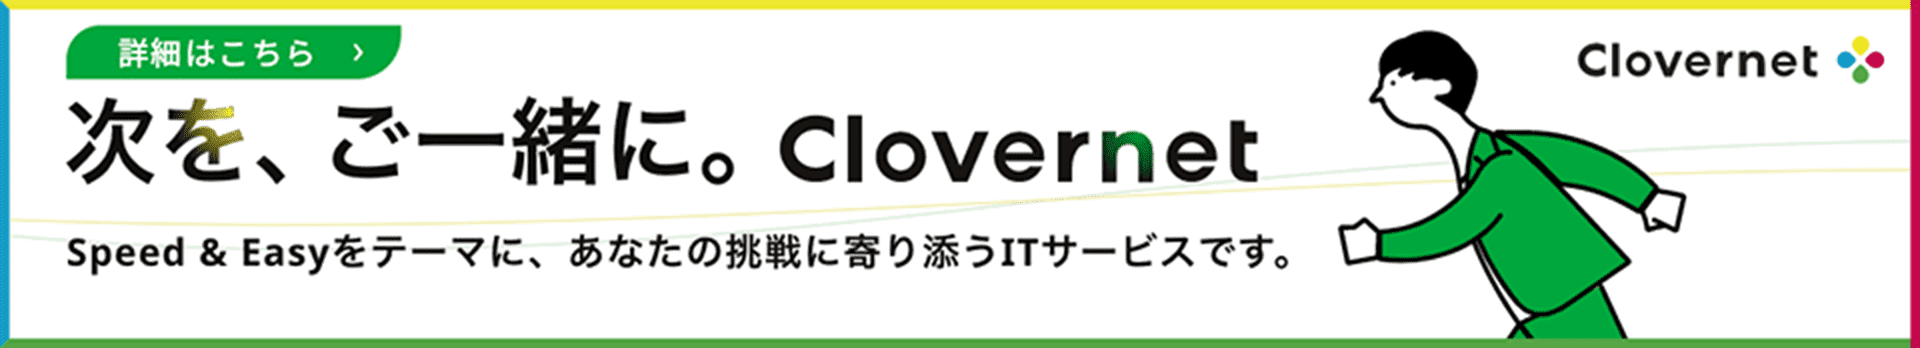 Clovernet